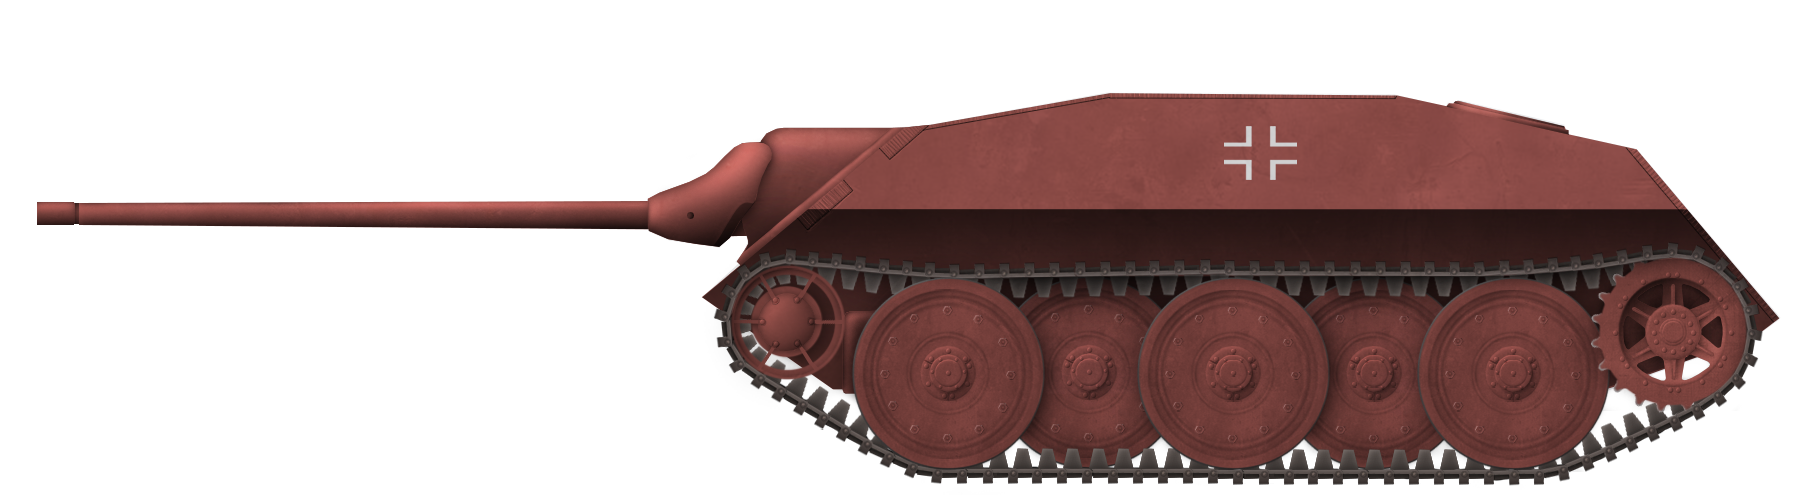 Panzerkampfwagen Maus II - Tank Encyclopedia